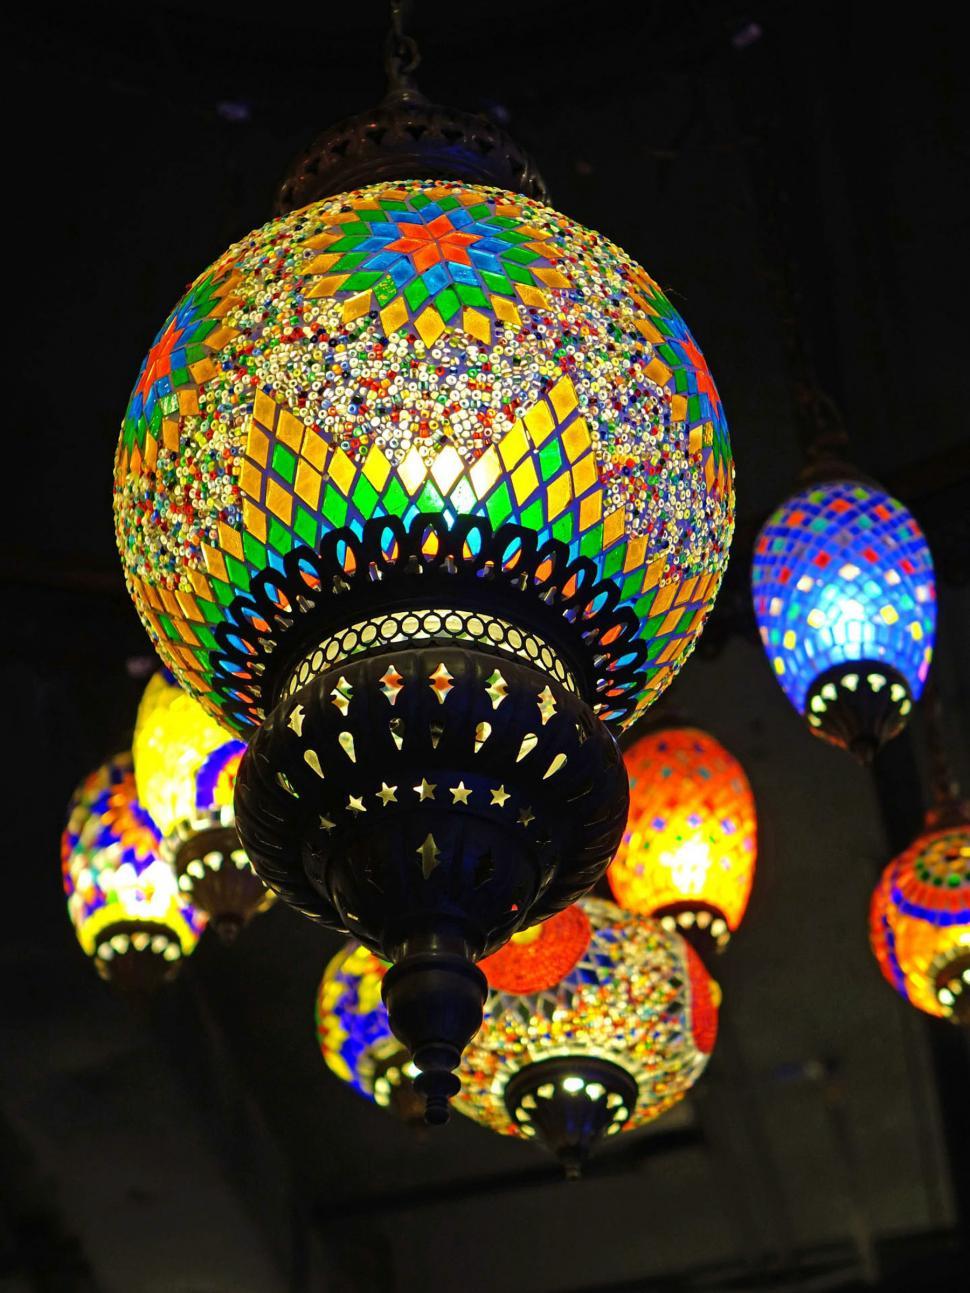 Free Image of Colorful Chinese Lanterns 